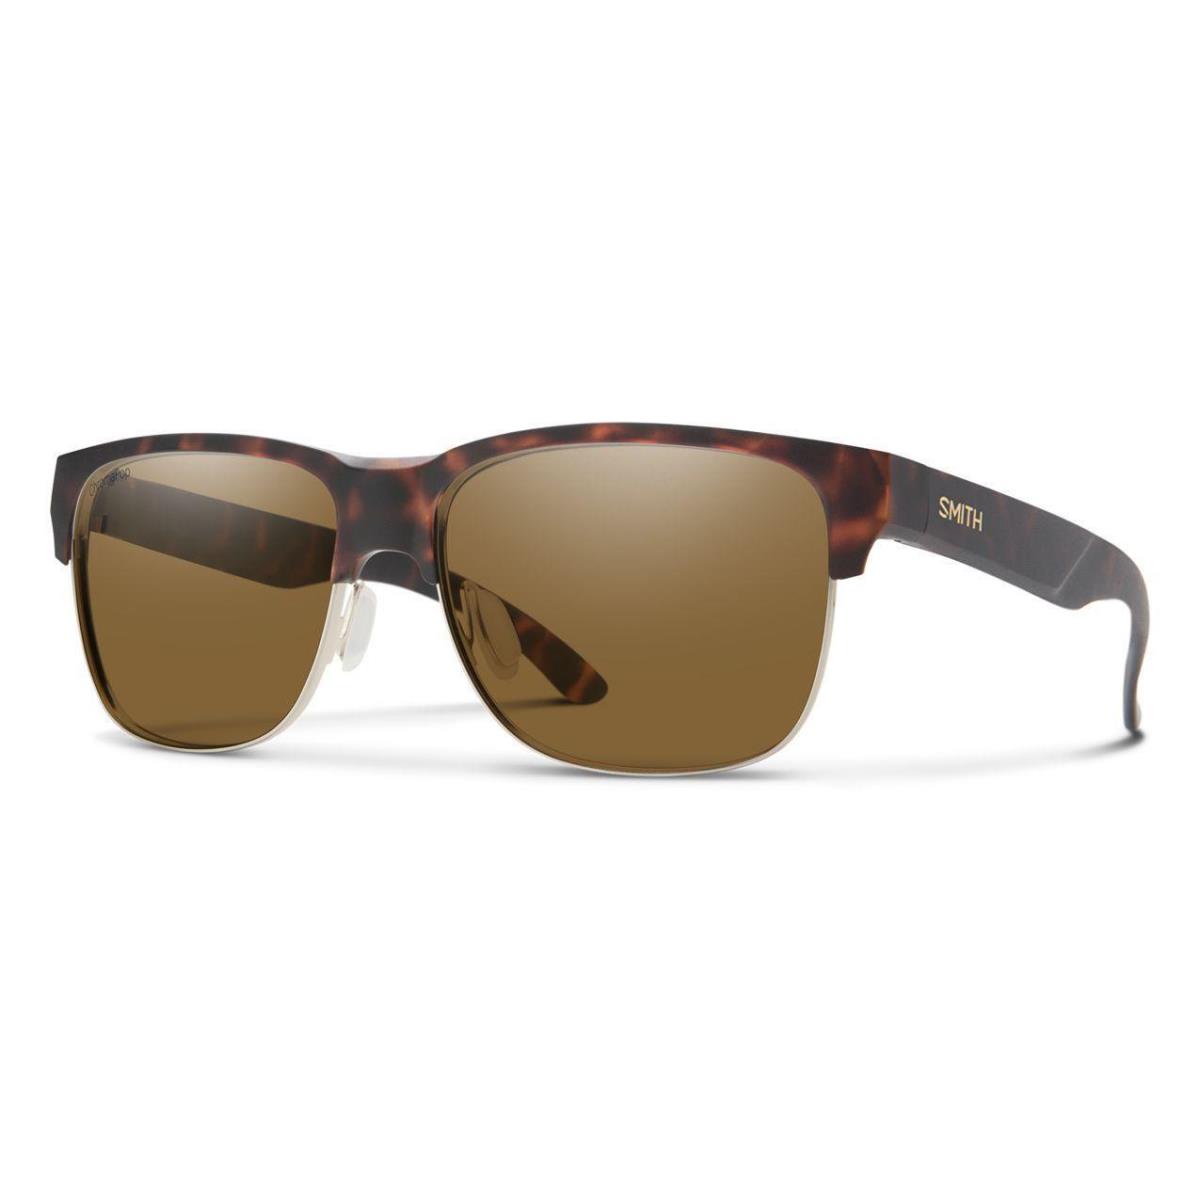 Smith Lowdown Split Sunglasses Matte Tortoise - Chromapop Polarized Brown